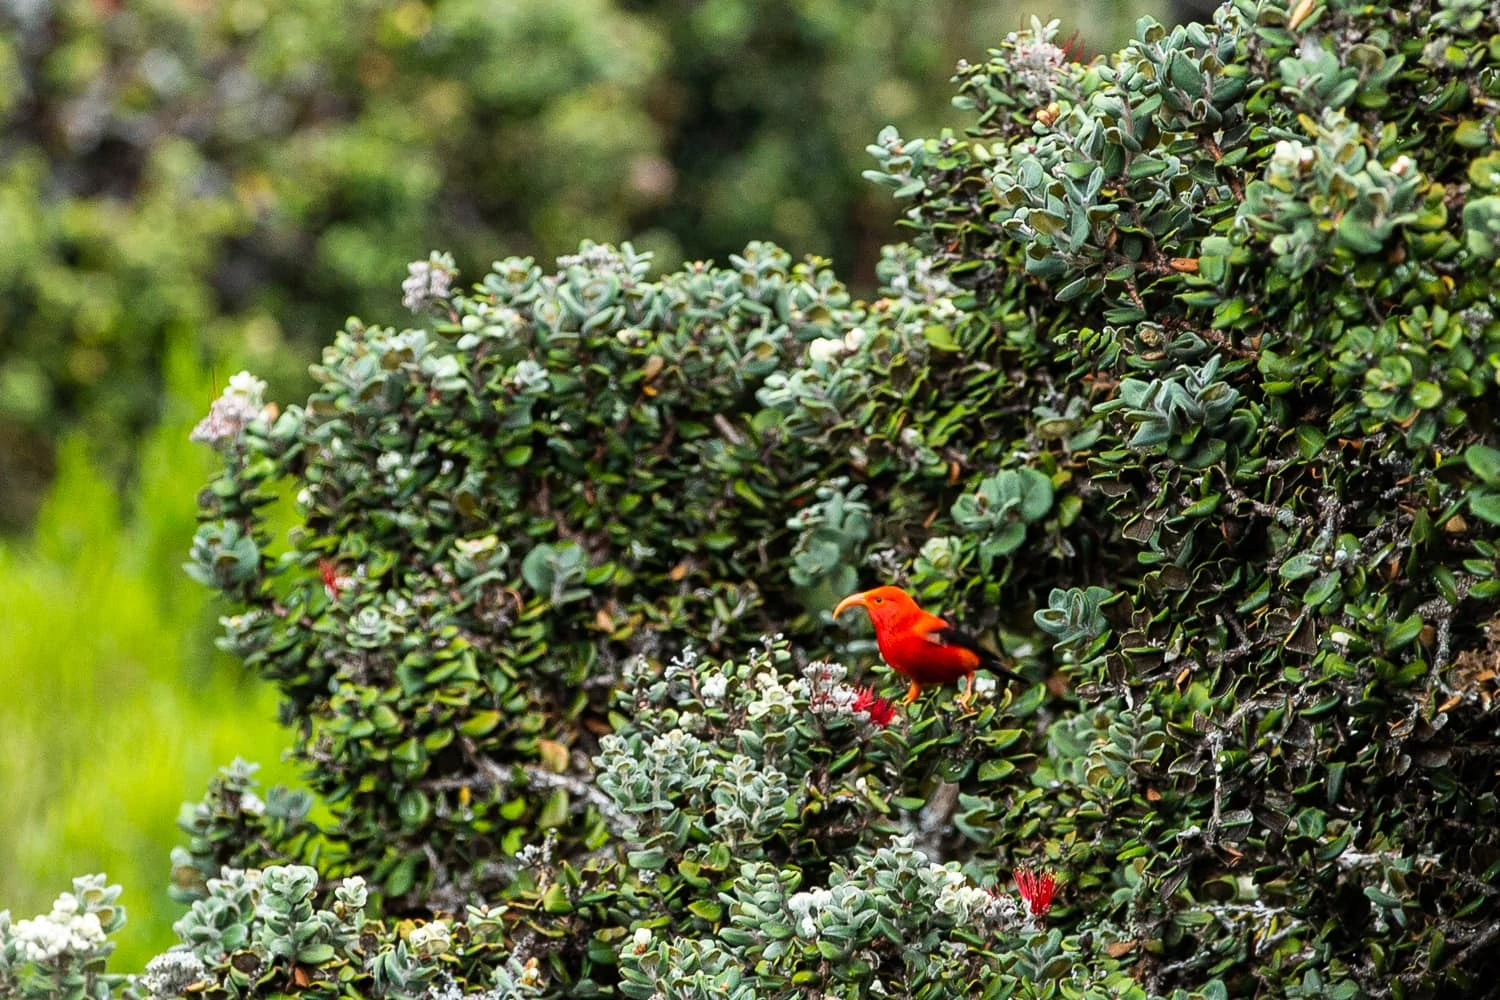 A red honeycreeper bird called the I'iwi bird is seen in a green shrub at Haleakala National Park.